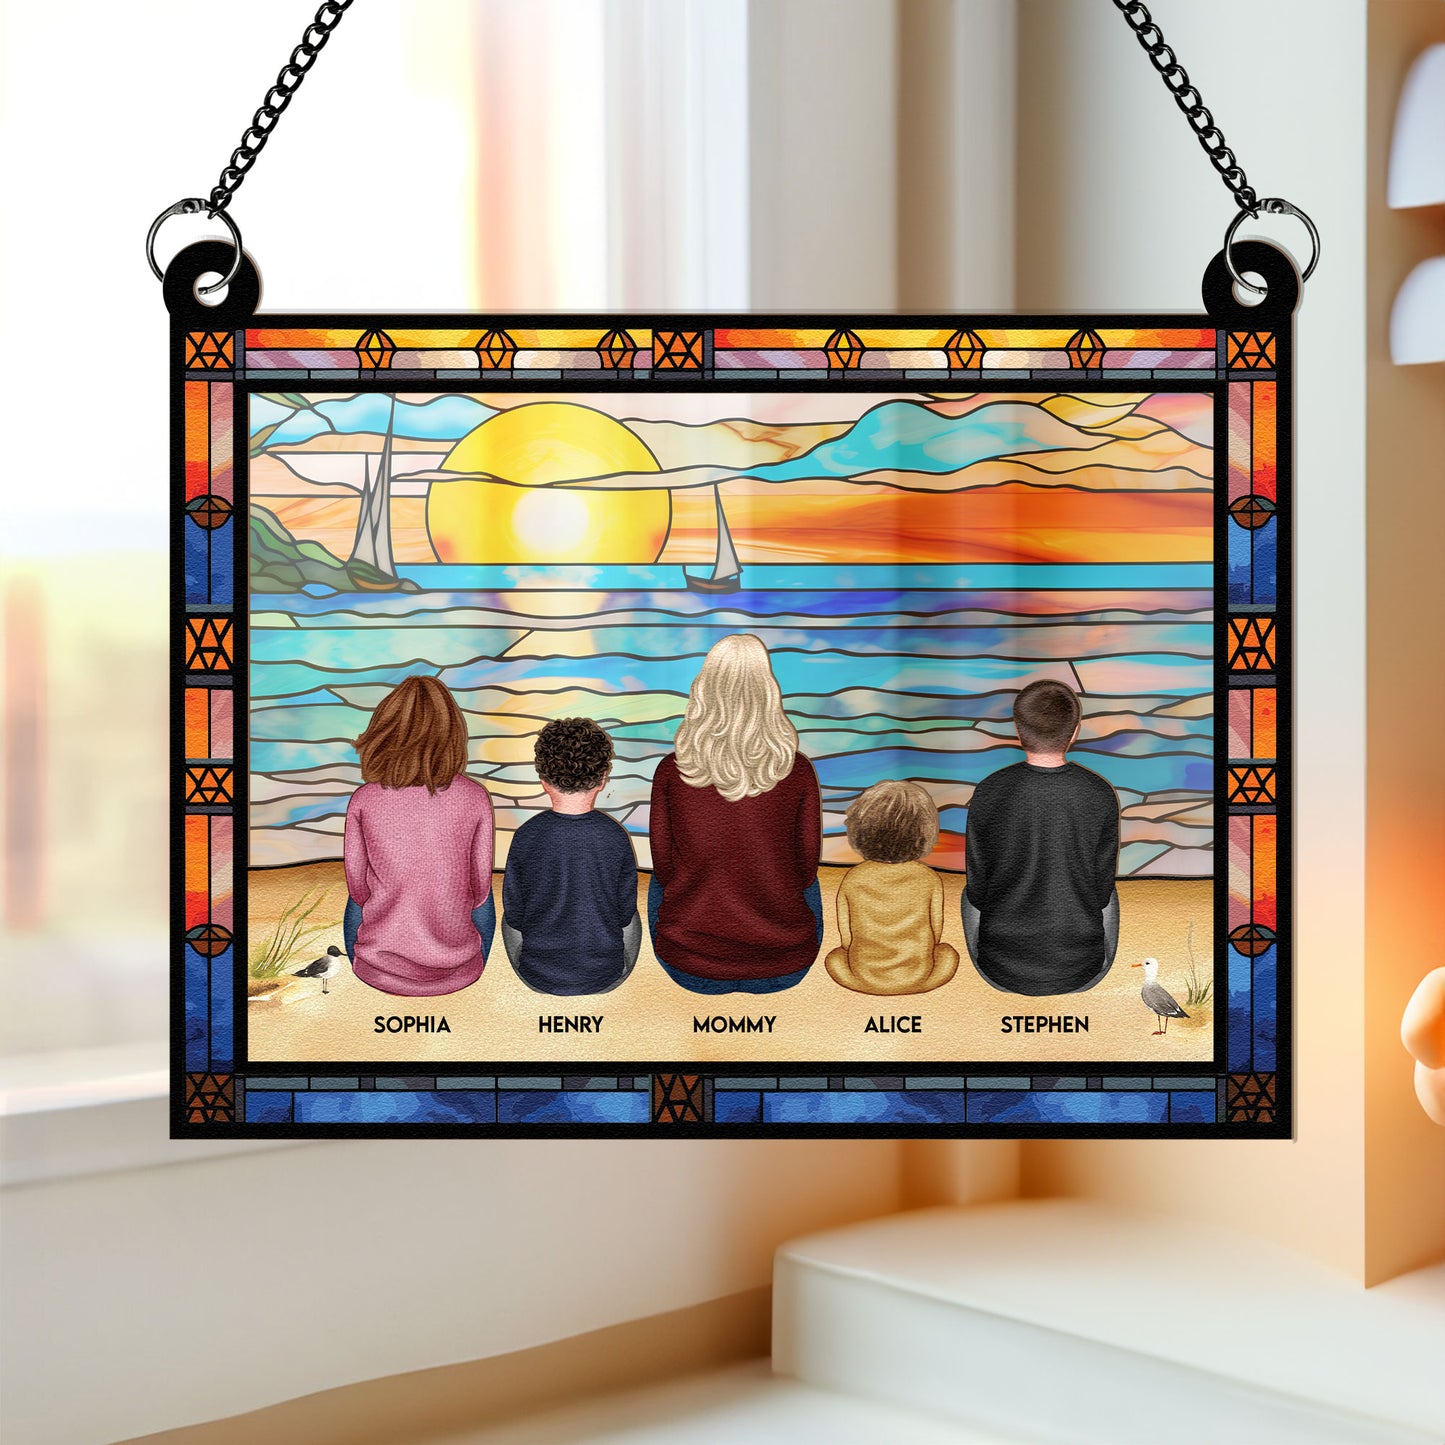 Mom & Children Sitting On The Beach - Personalized Window Hanging Suncatcher Ornament